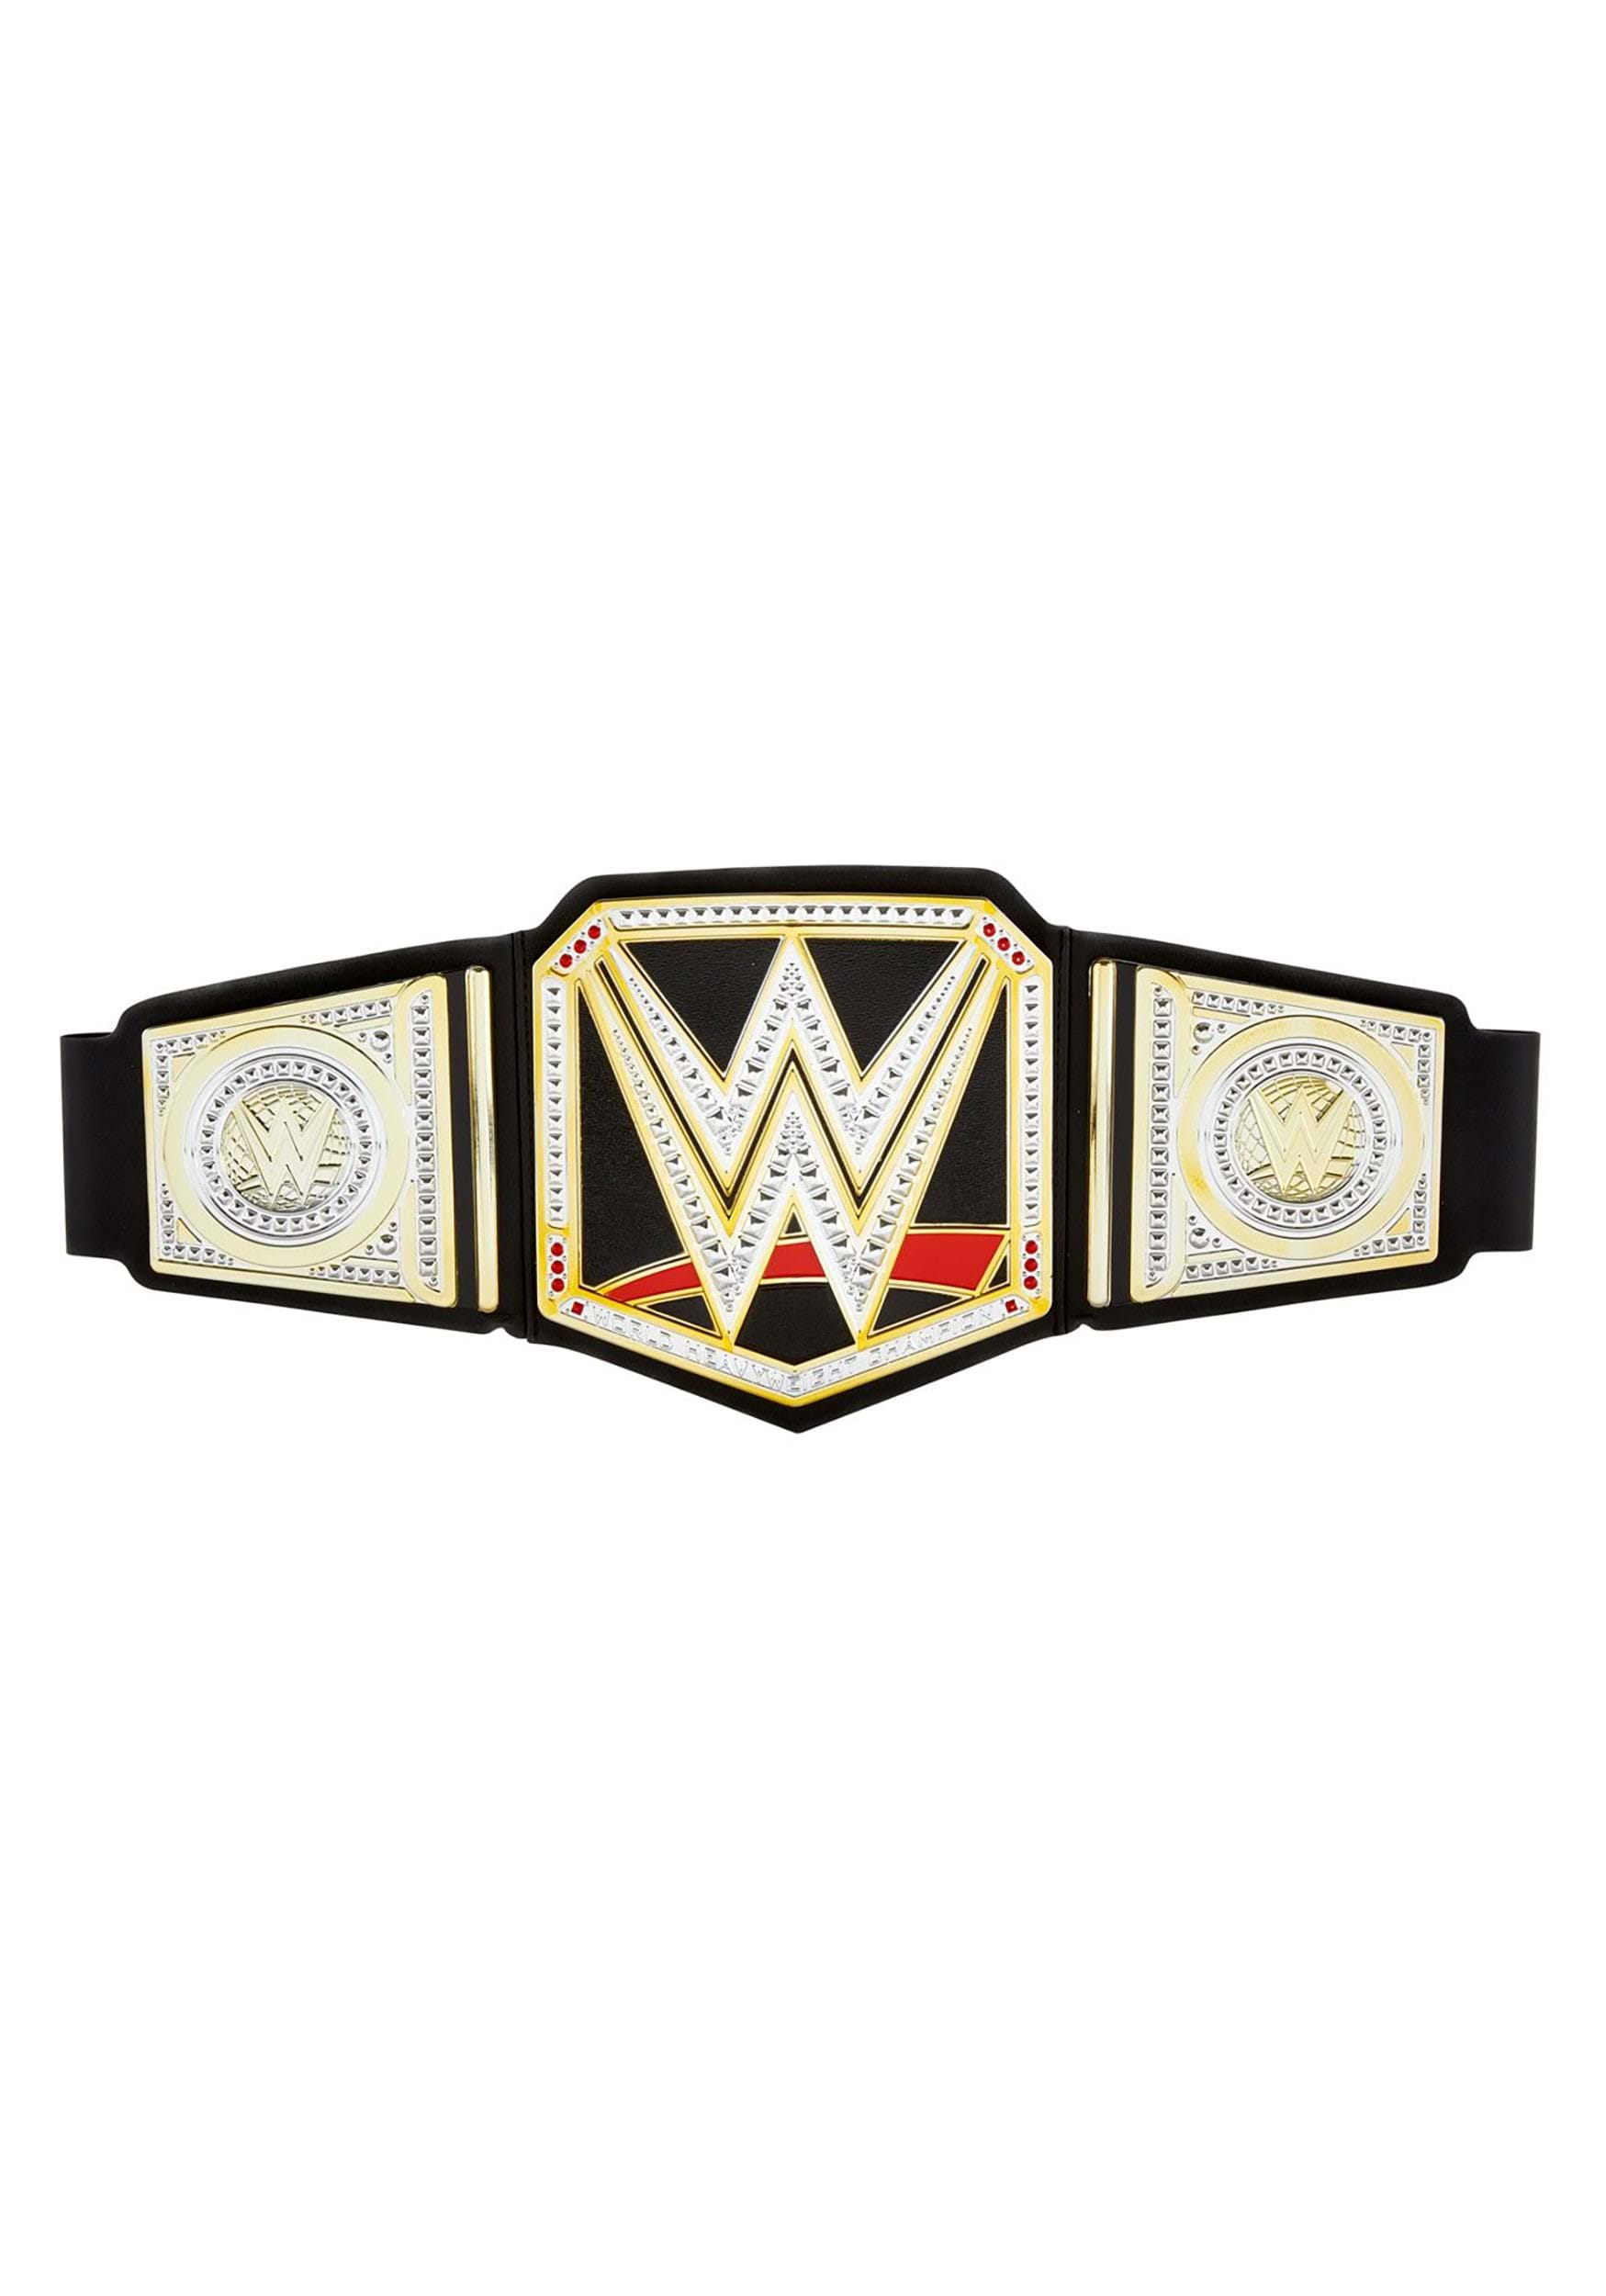 WWE Championship Roleplay Belt, 44% OFF | www.vitel.lutsk.ua